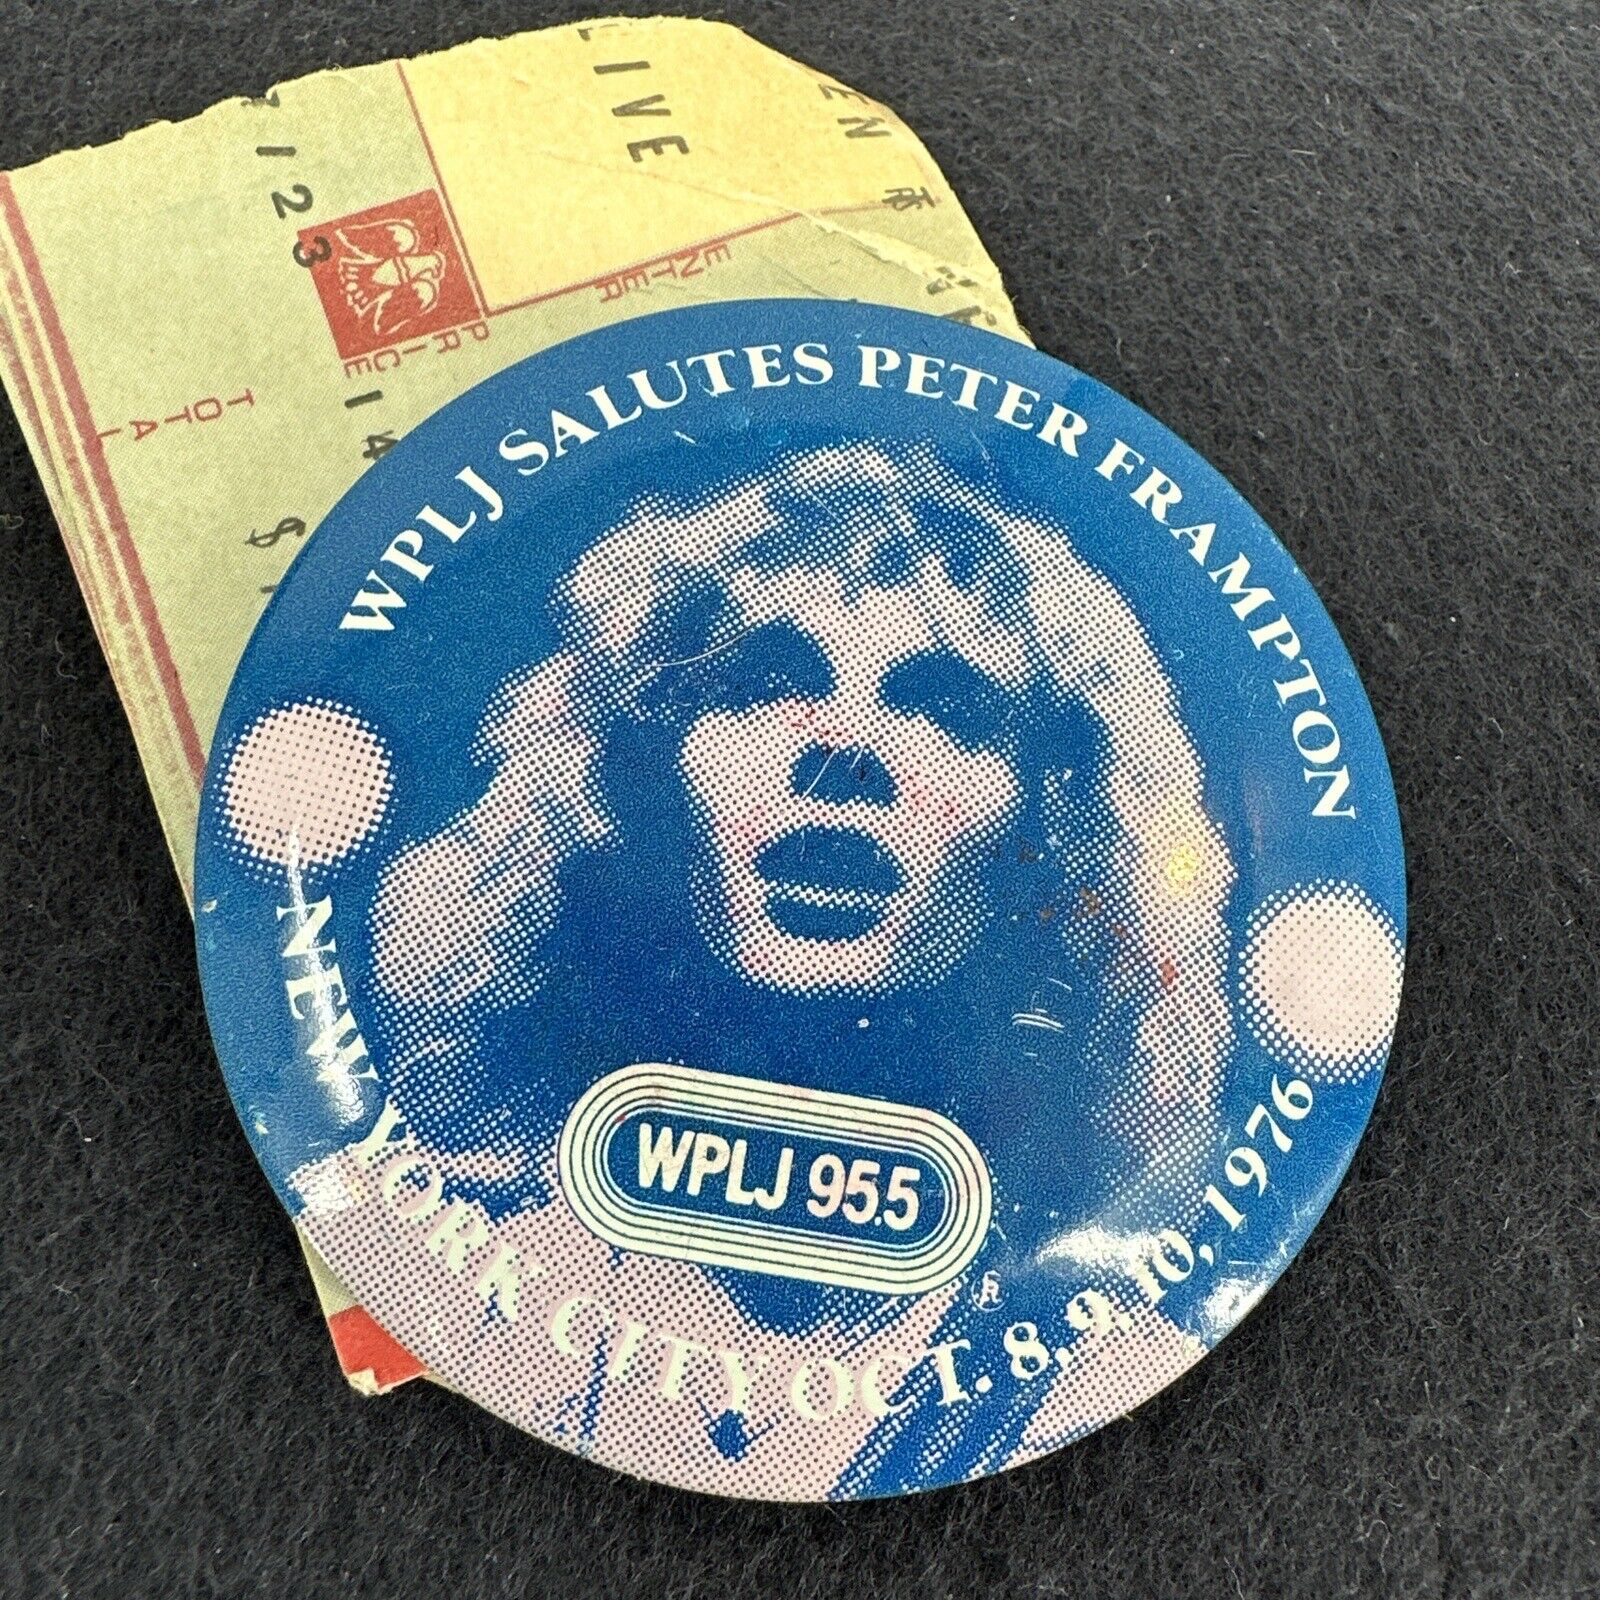 Rare Vintage 1976 PETER FRAMPTON Button/ Pin With Original Ticket Stubs As Found